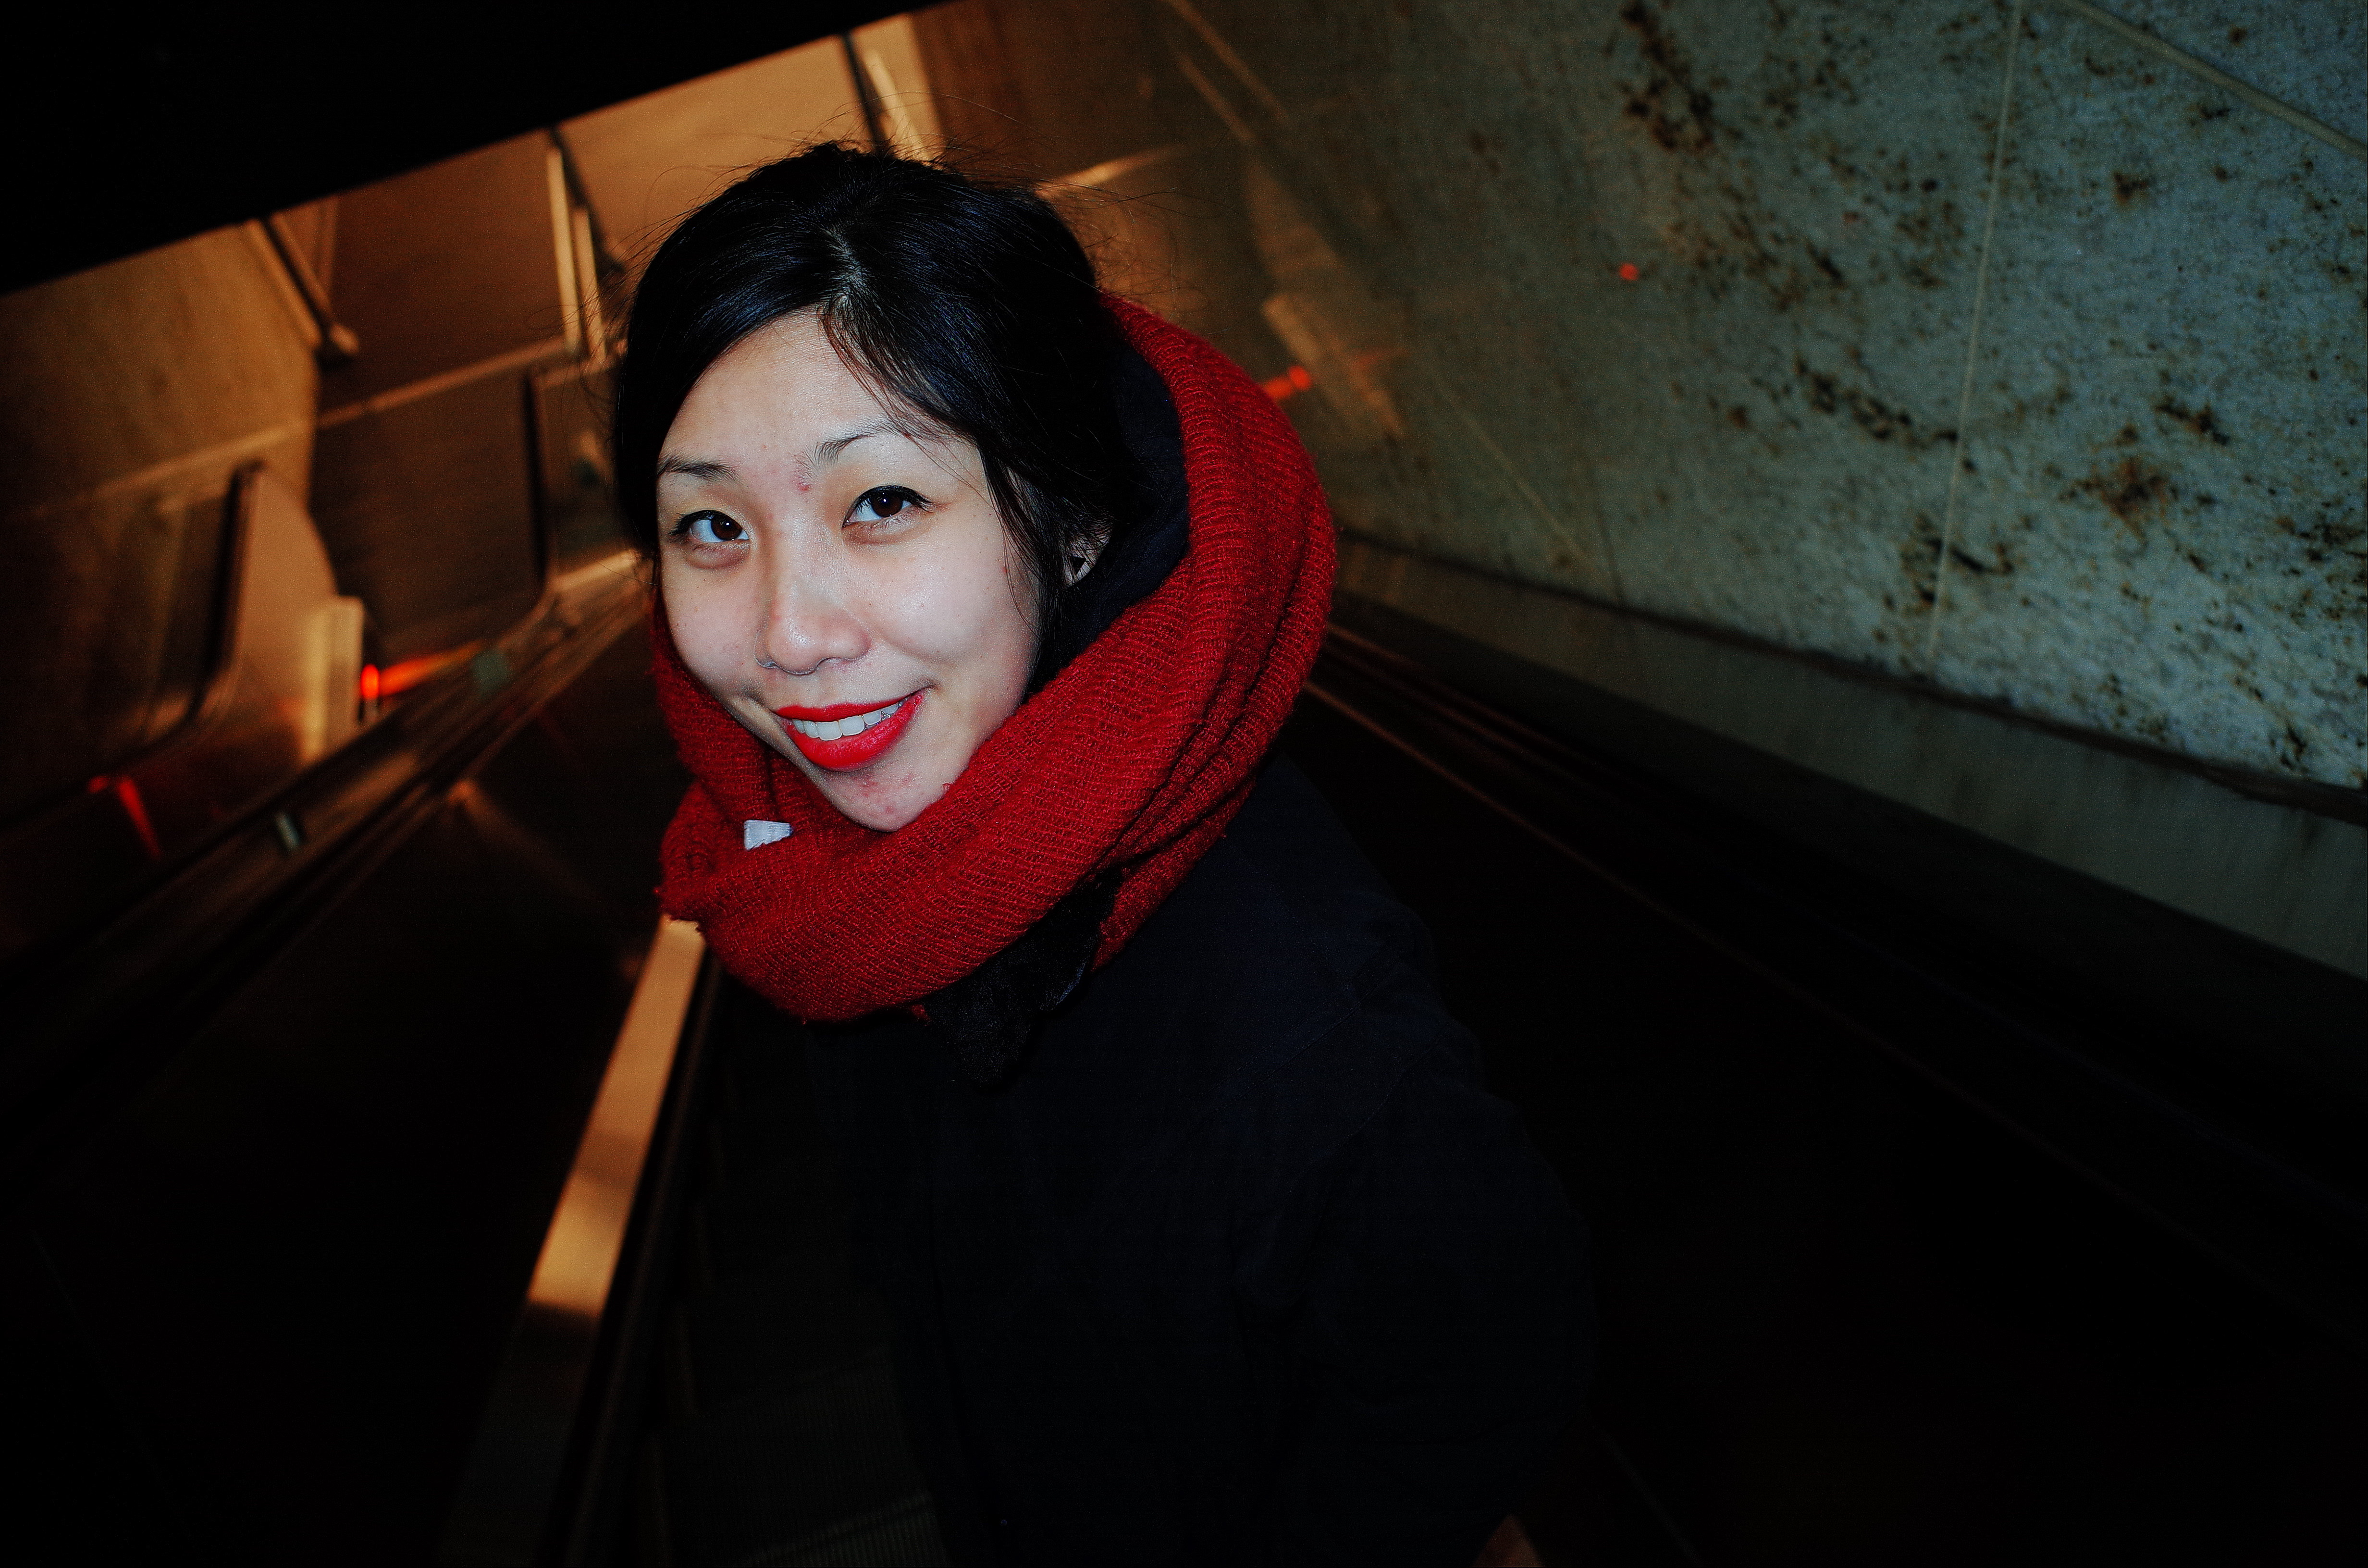 Cindy going down escalator. NYC, 2018